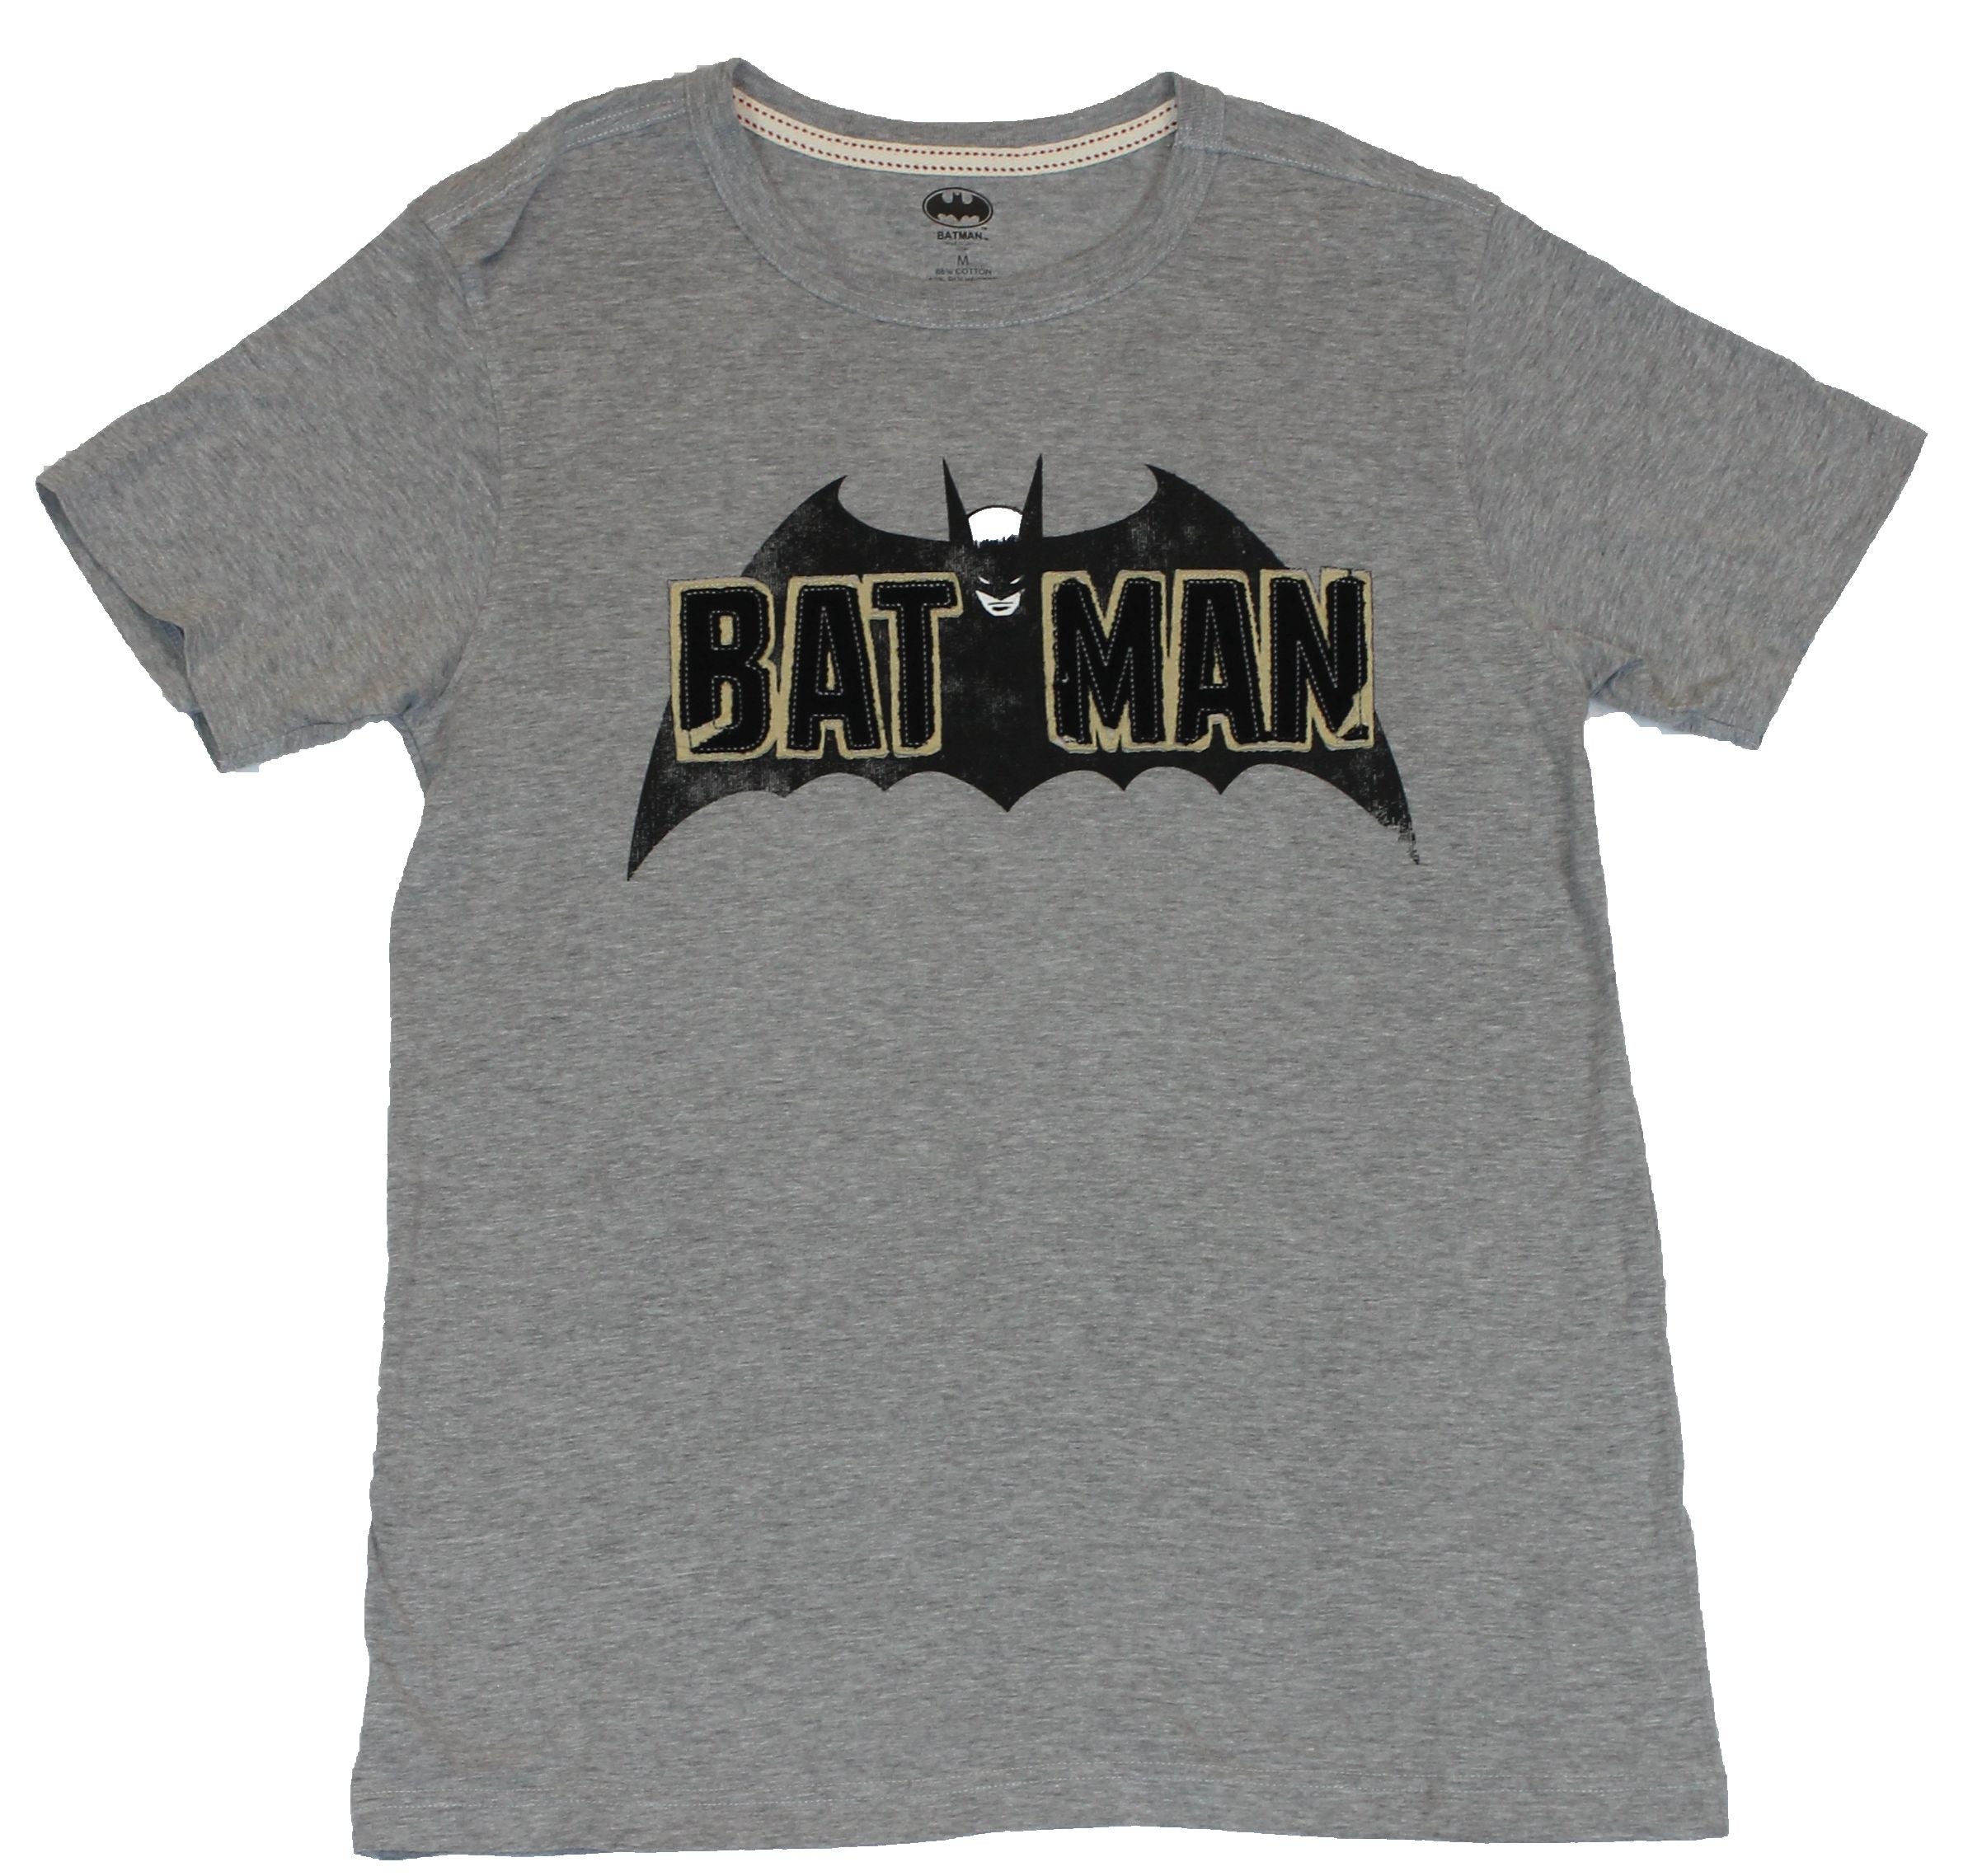 Batman (DC Comics) Mens T-Shirt - 60s Style Embrodried Patch Image